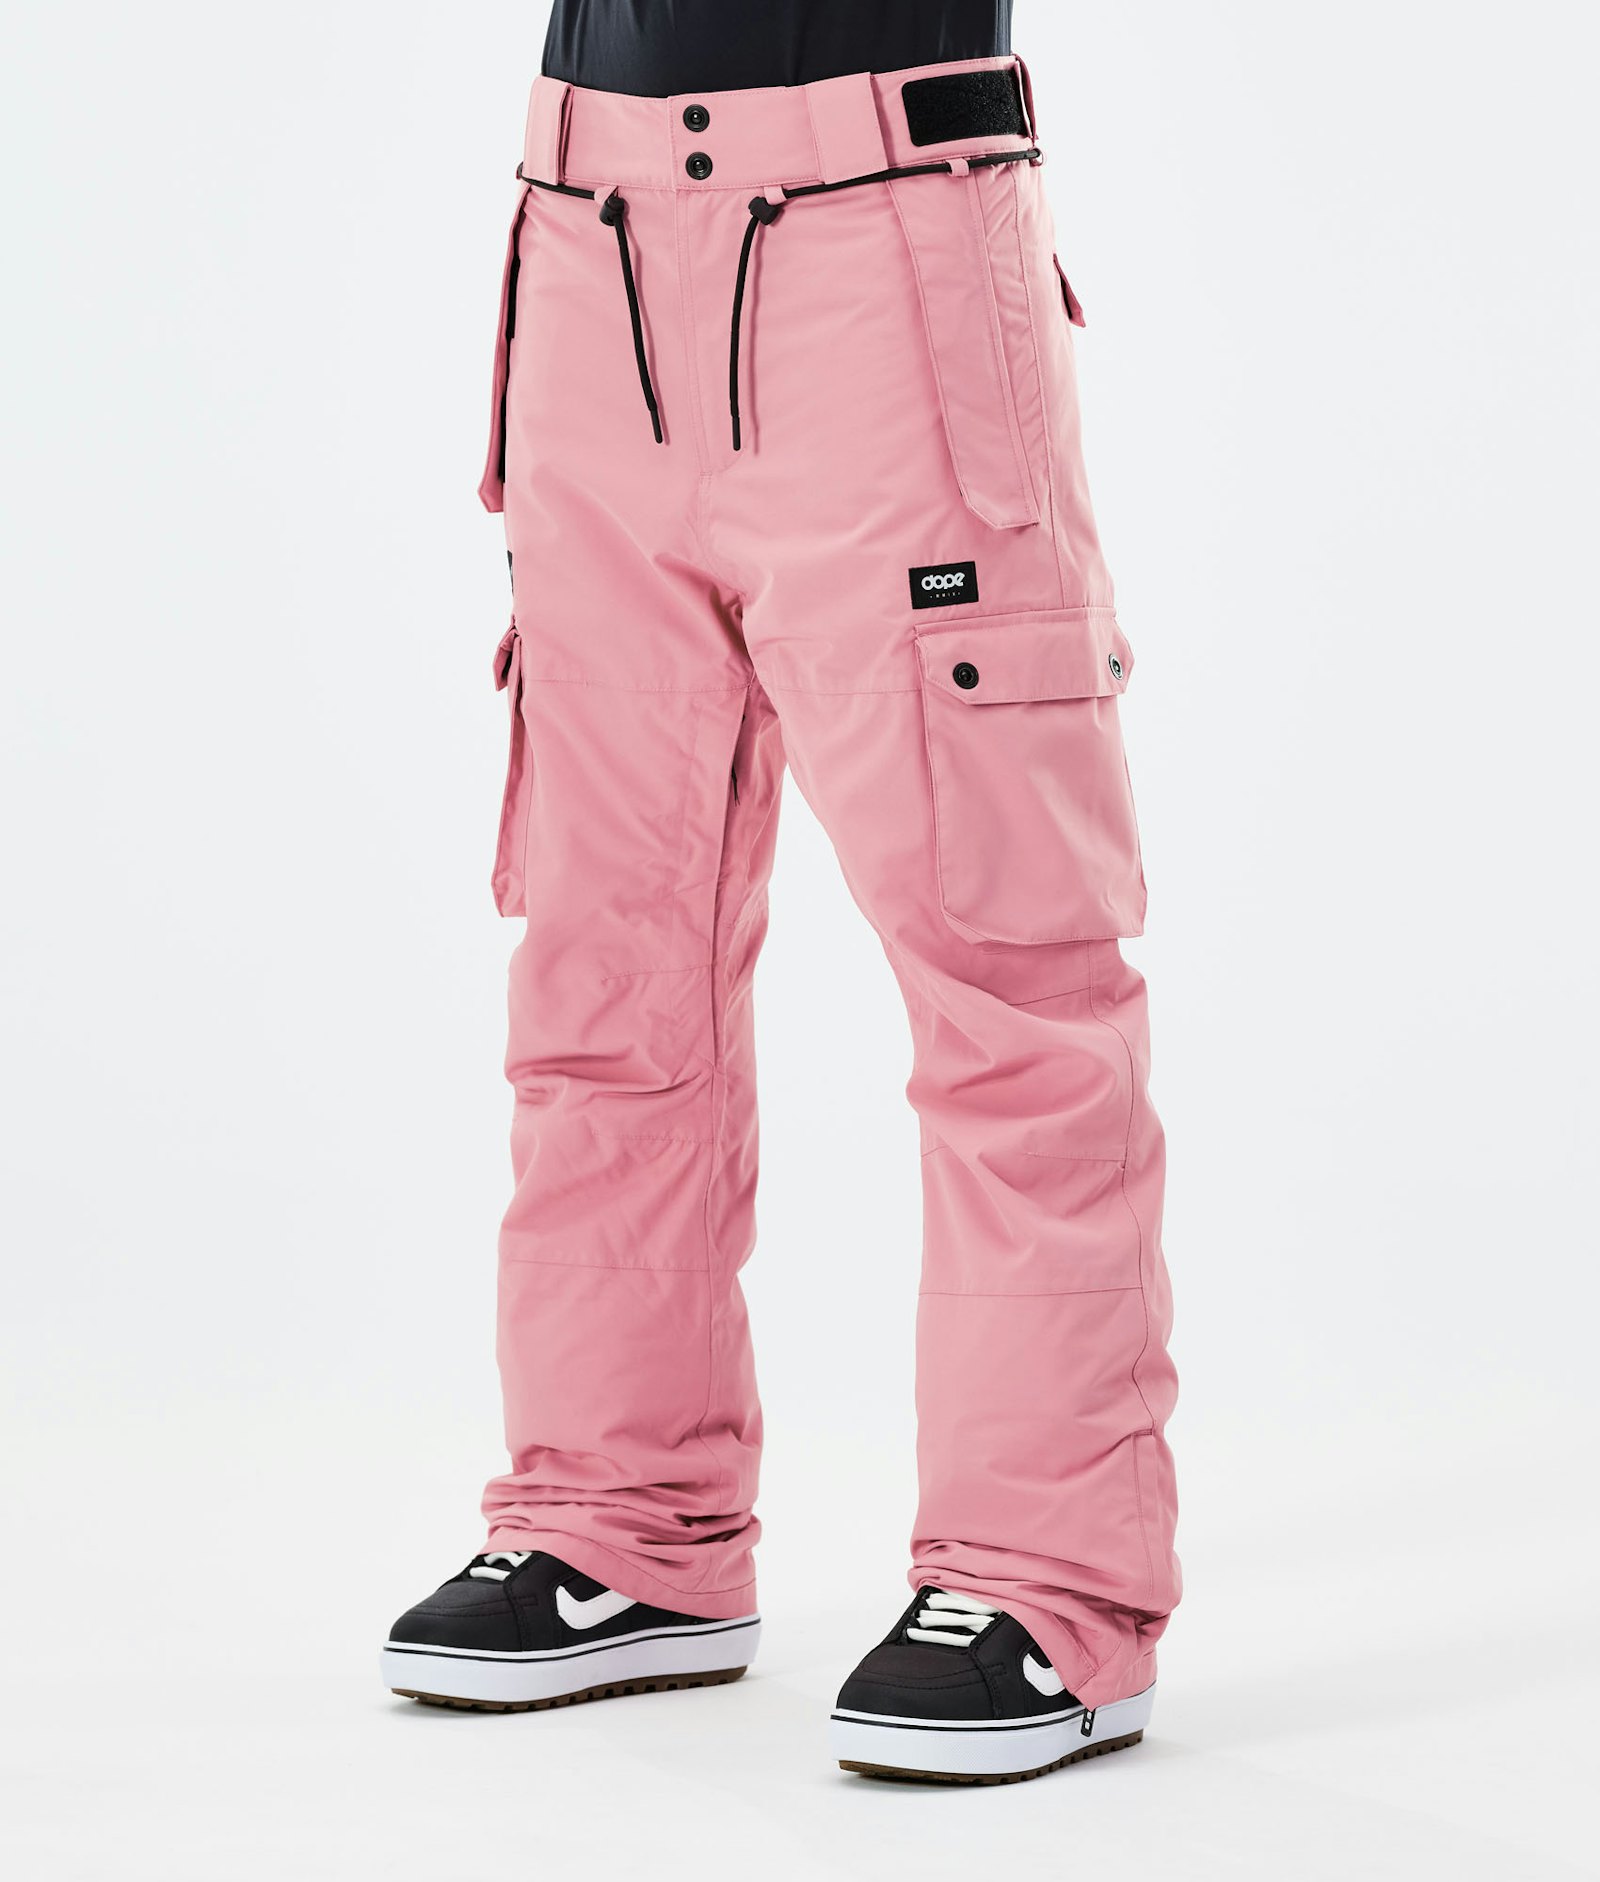 Topshop Sno ski high rise salopettes in pink - ShopStyle Pants